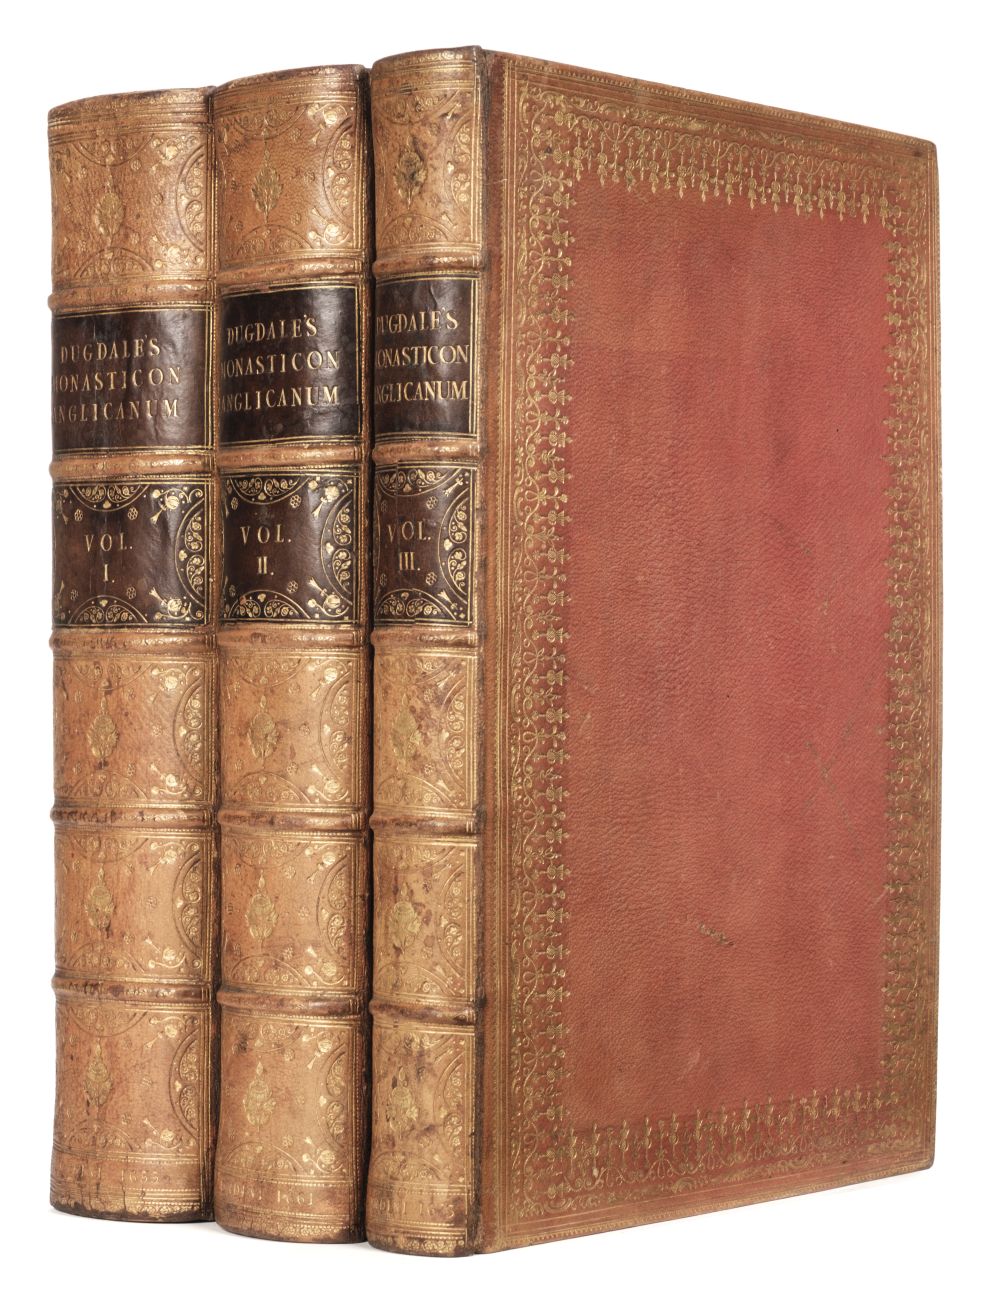 Dugdale (William, & Dodsworth, Roger). Monasticon Anglicanum, 3 volumes, 1st editions, 1655-1673